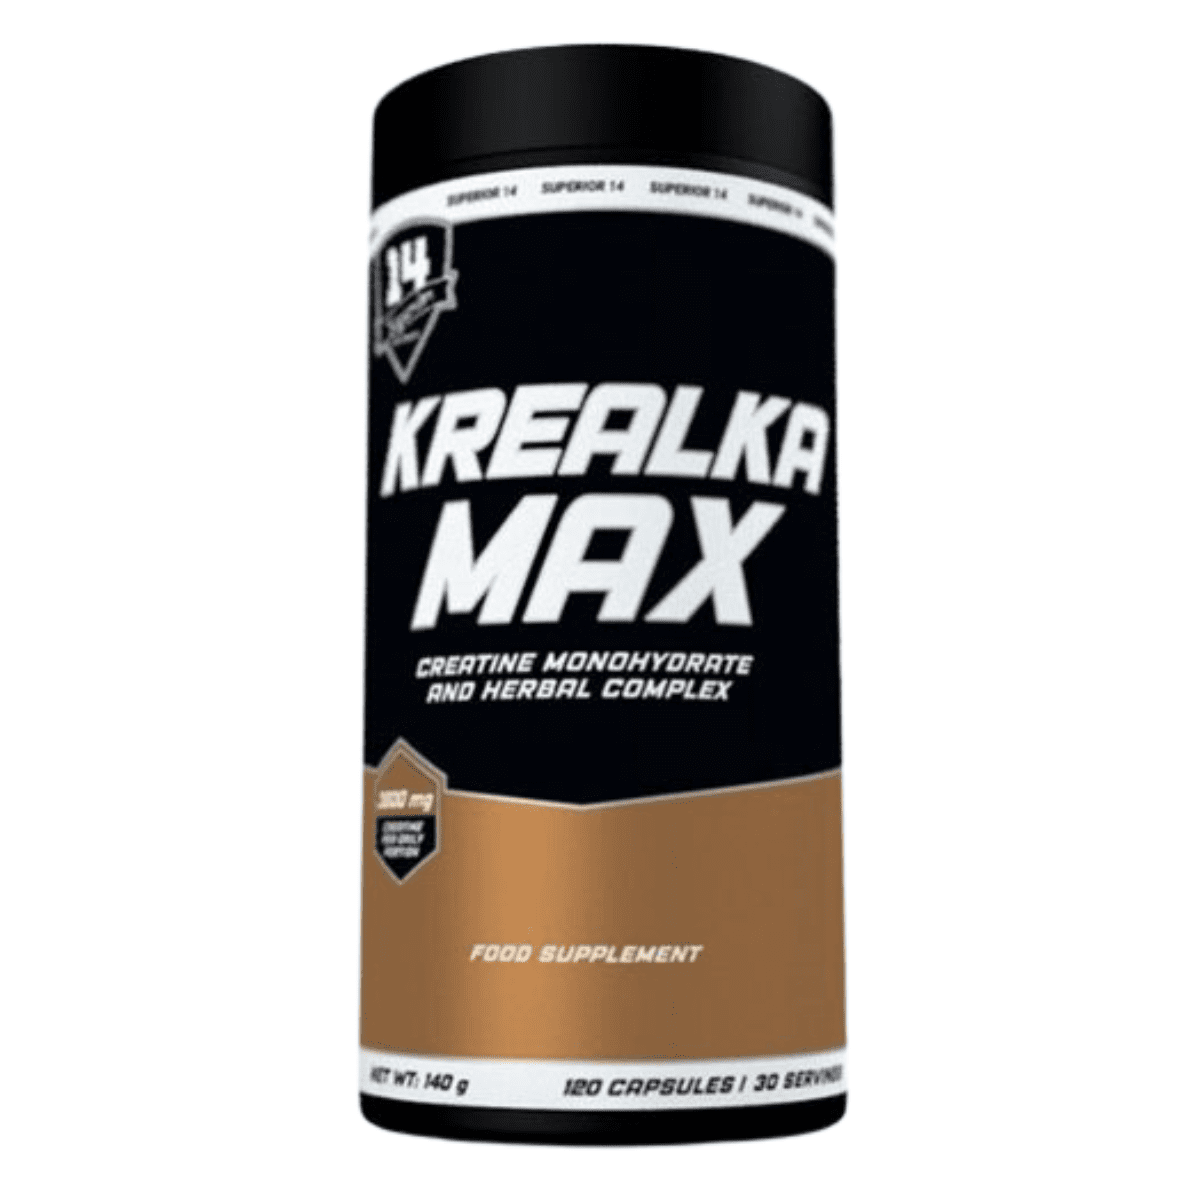 Superior Krealka Max | Muscle Freak